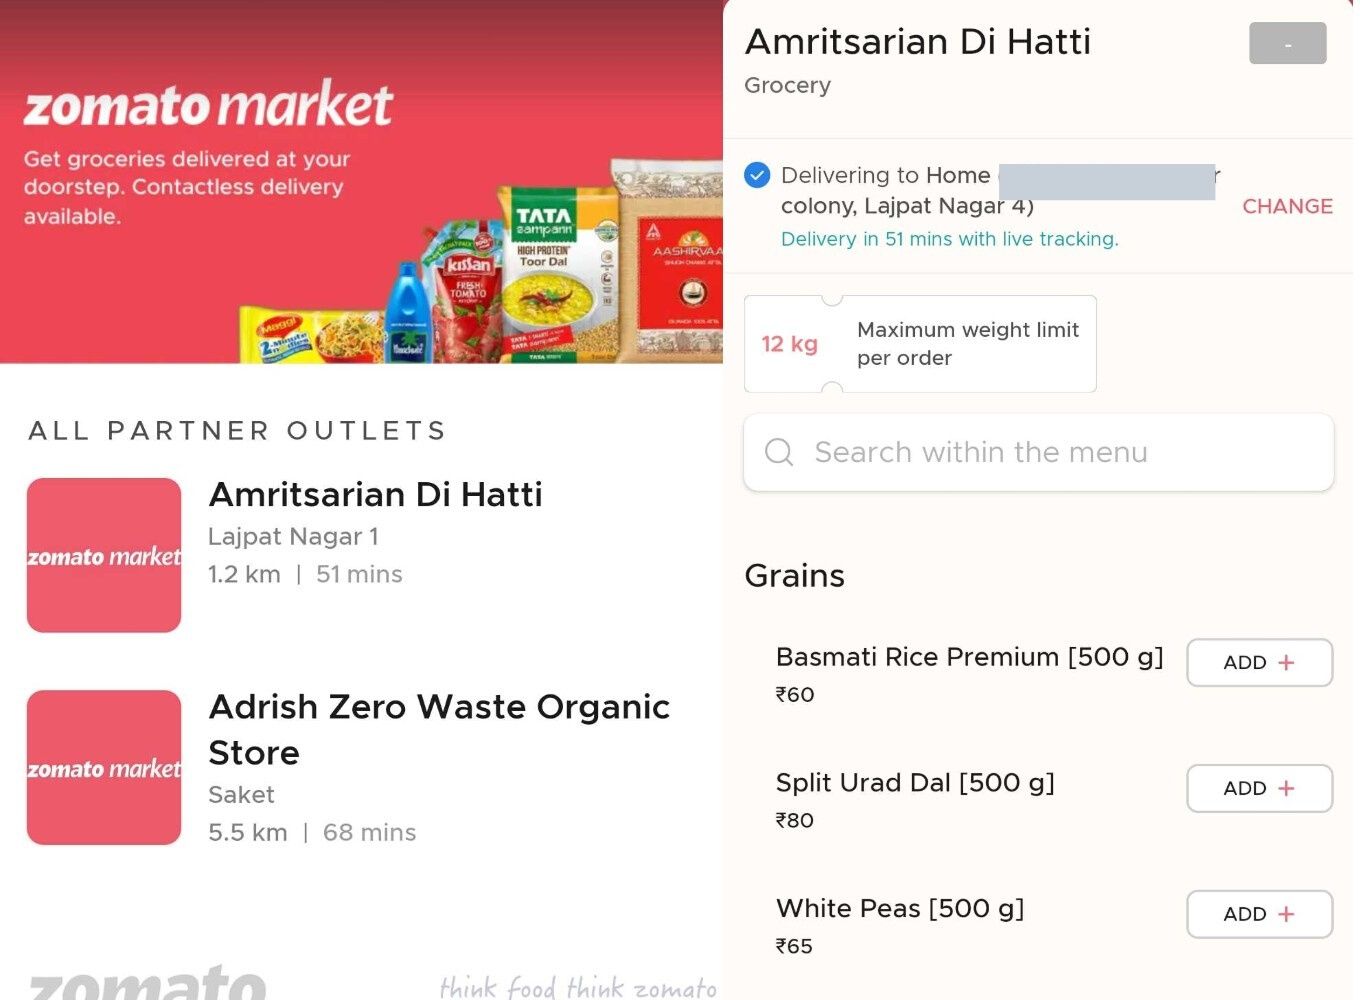 #StartupsVsCovid19: Zomato Launches Zomato Market To Offer Grocery Delivery